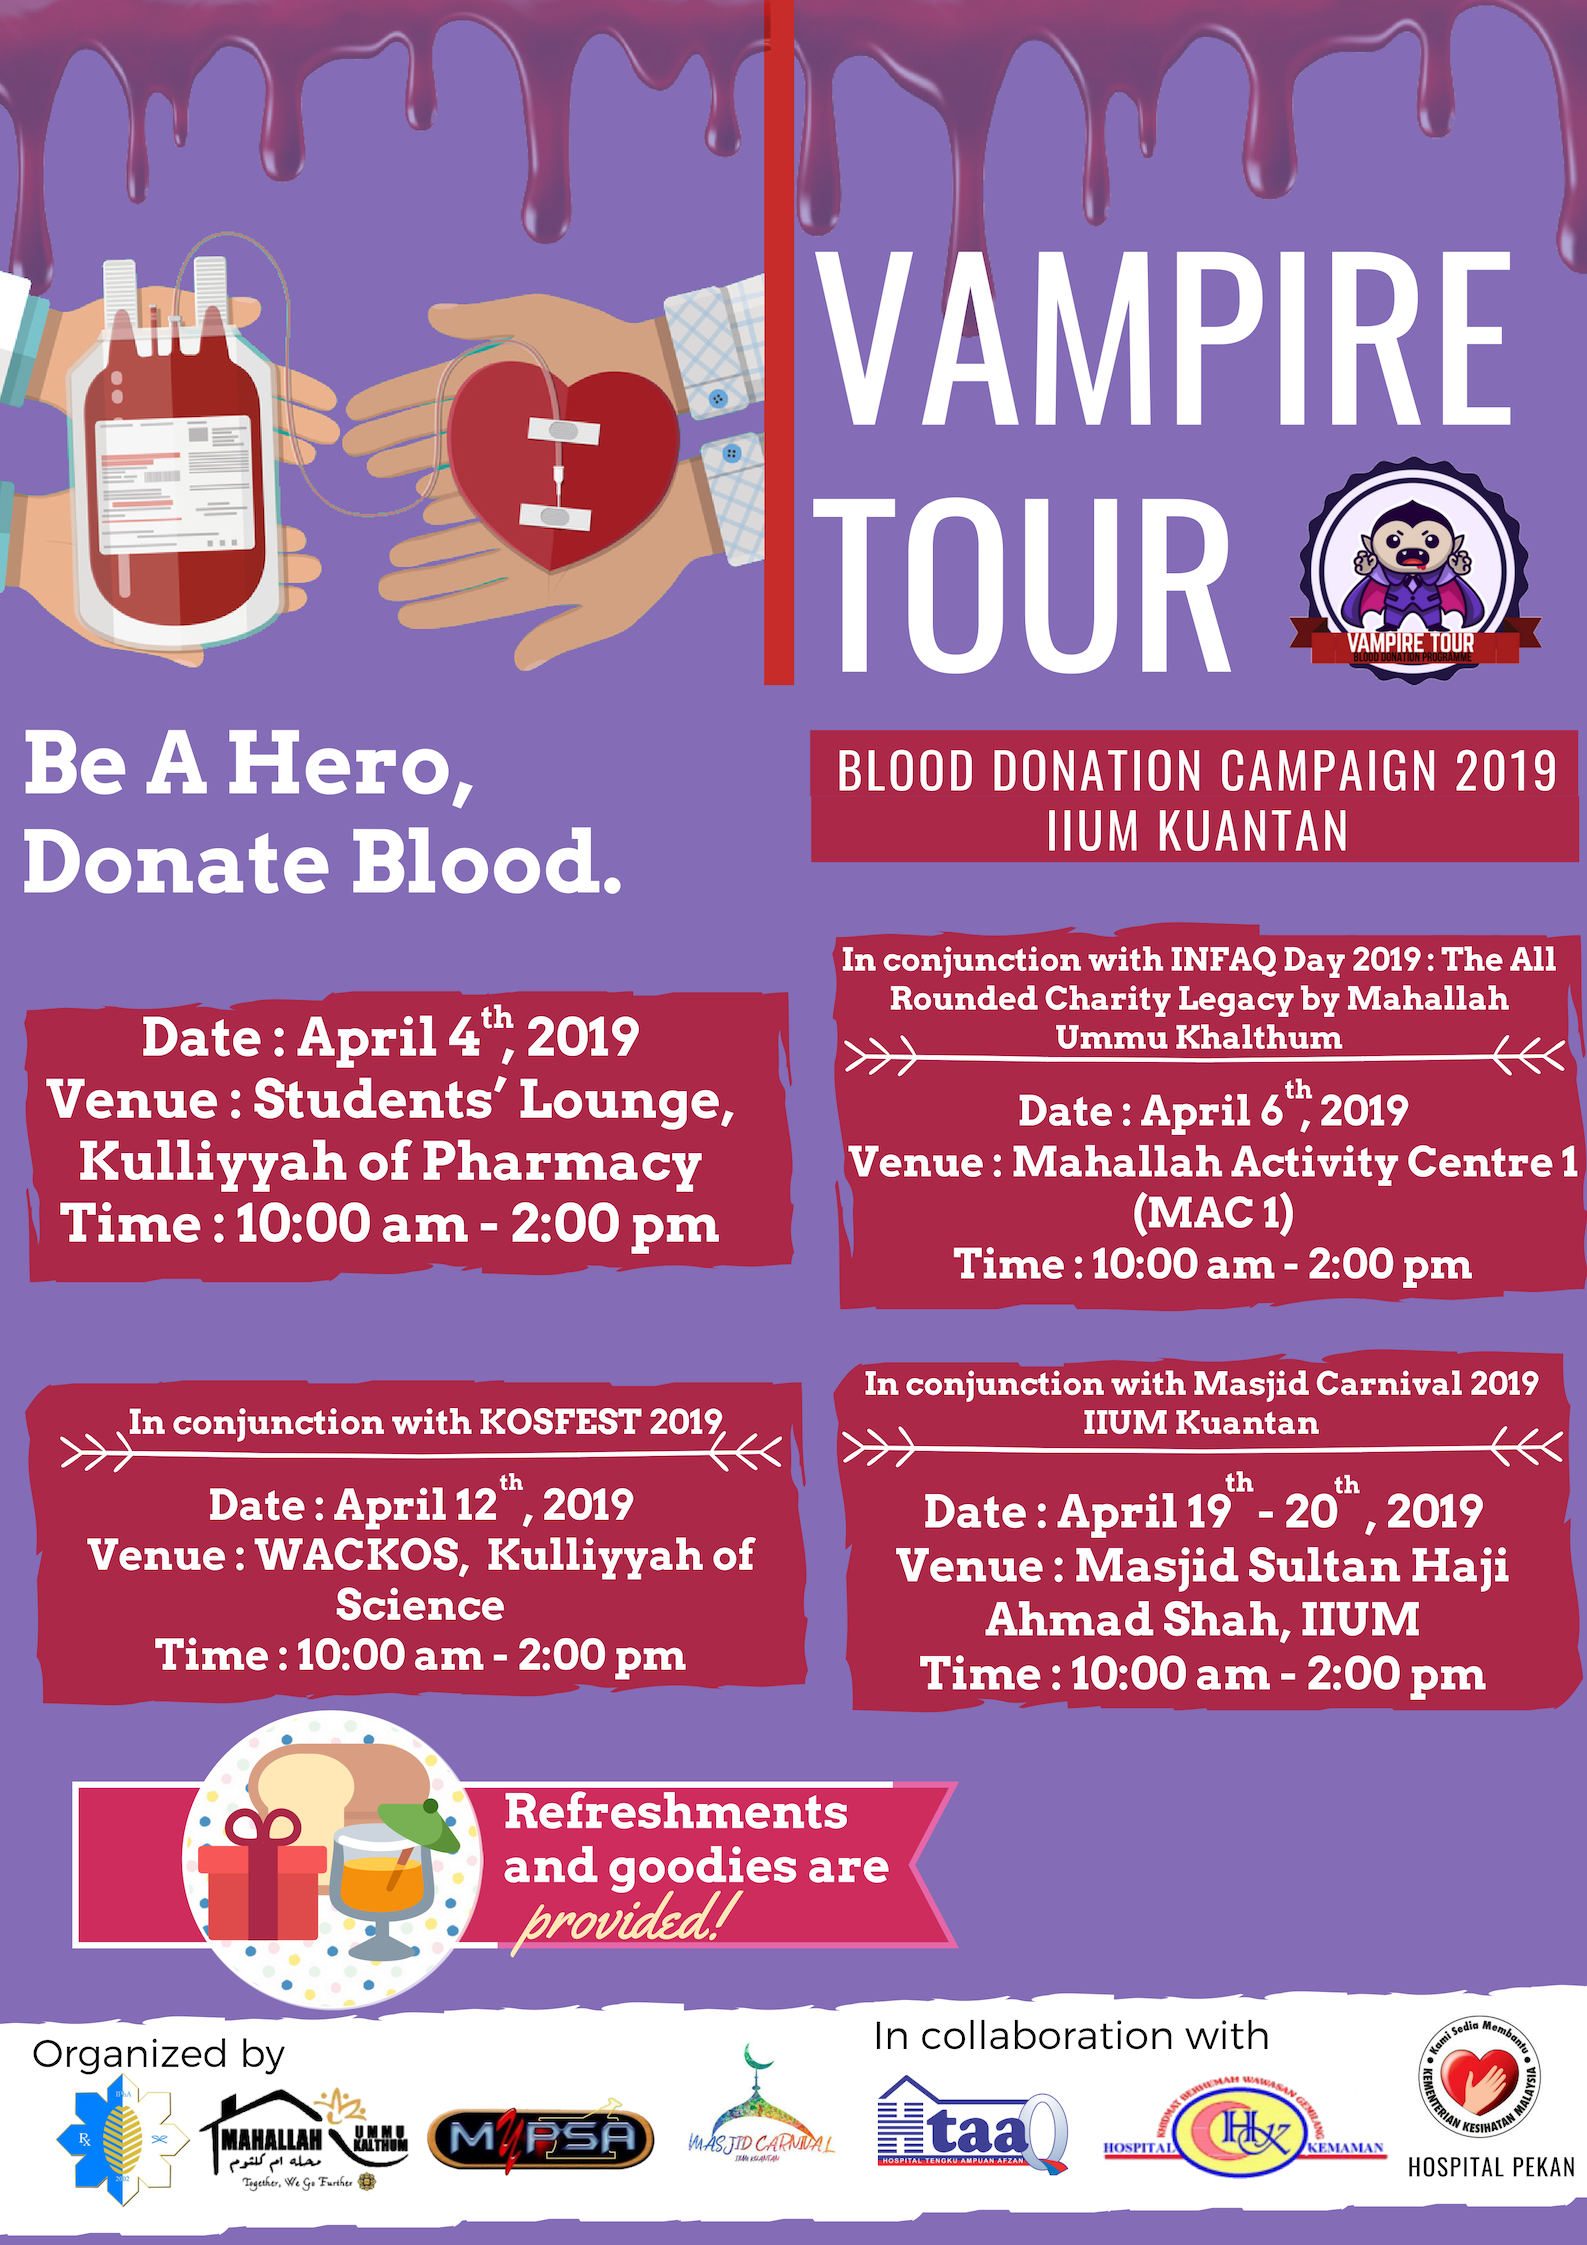 Vampire Tour: Blood Donation Programme 2019